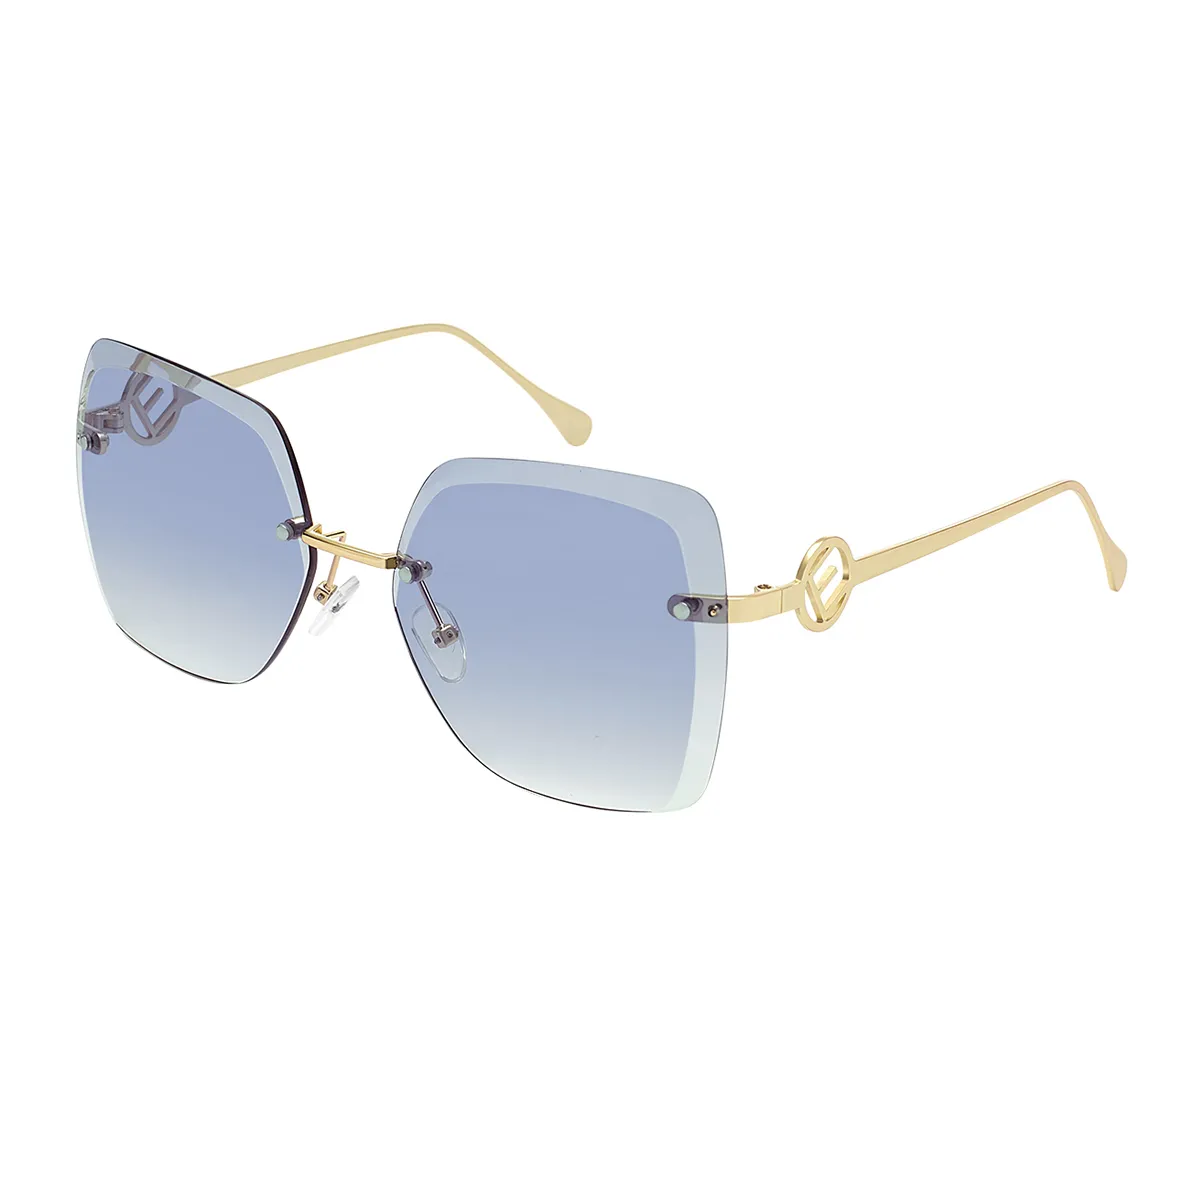 Jeanette - Geometric Blue Sunglasses for Women